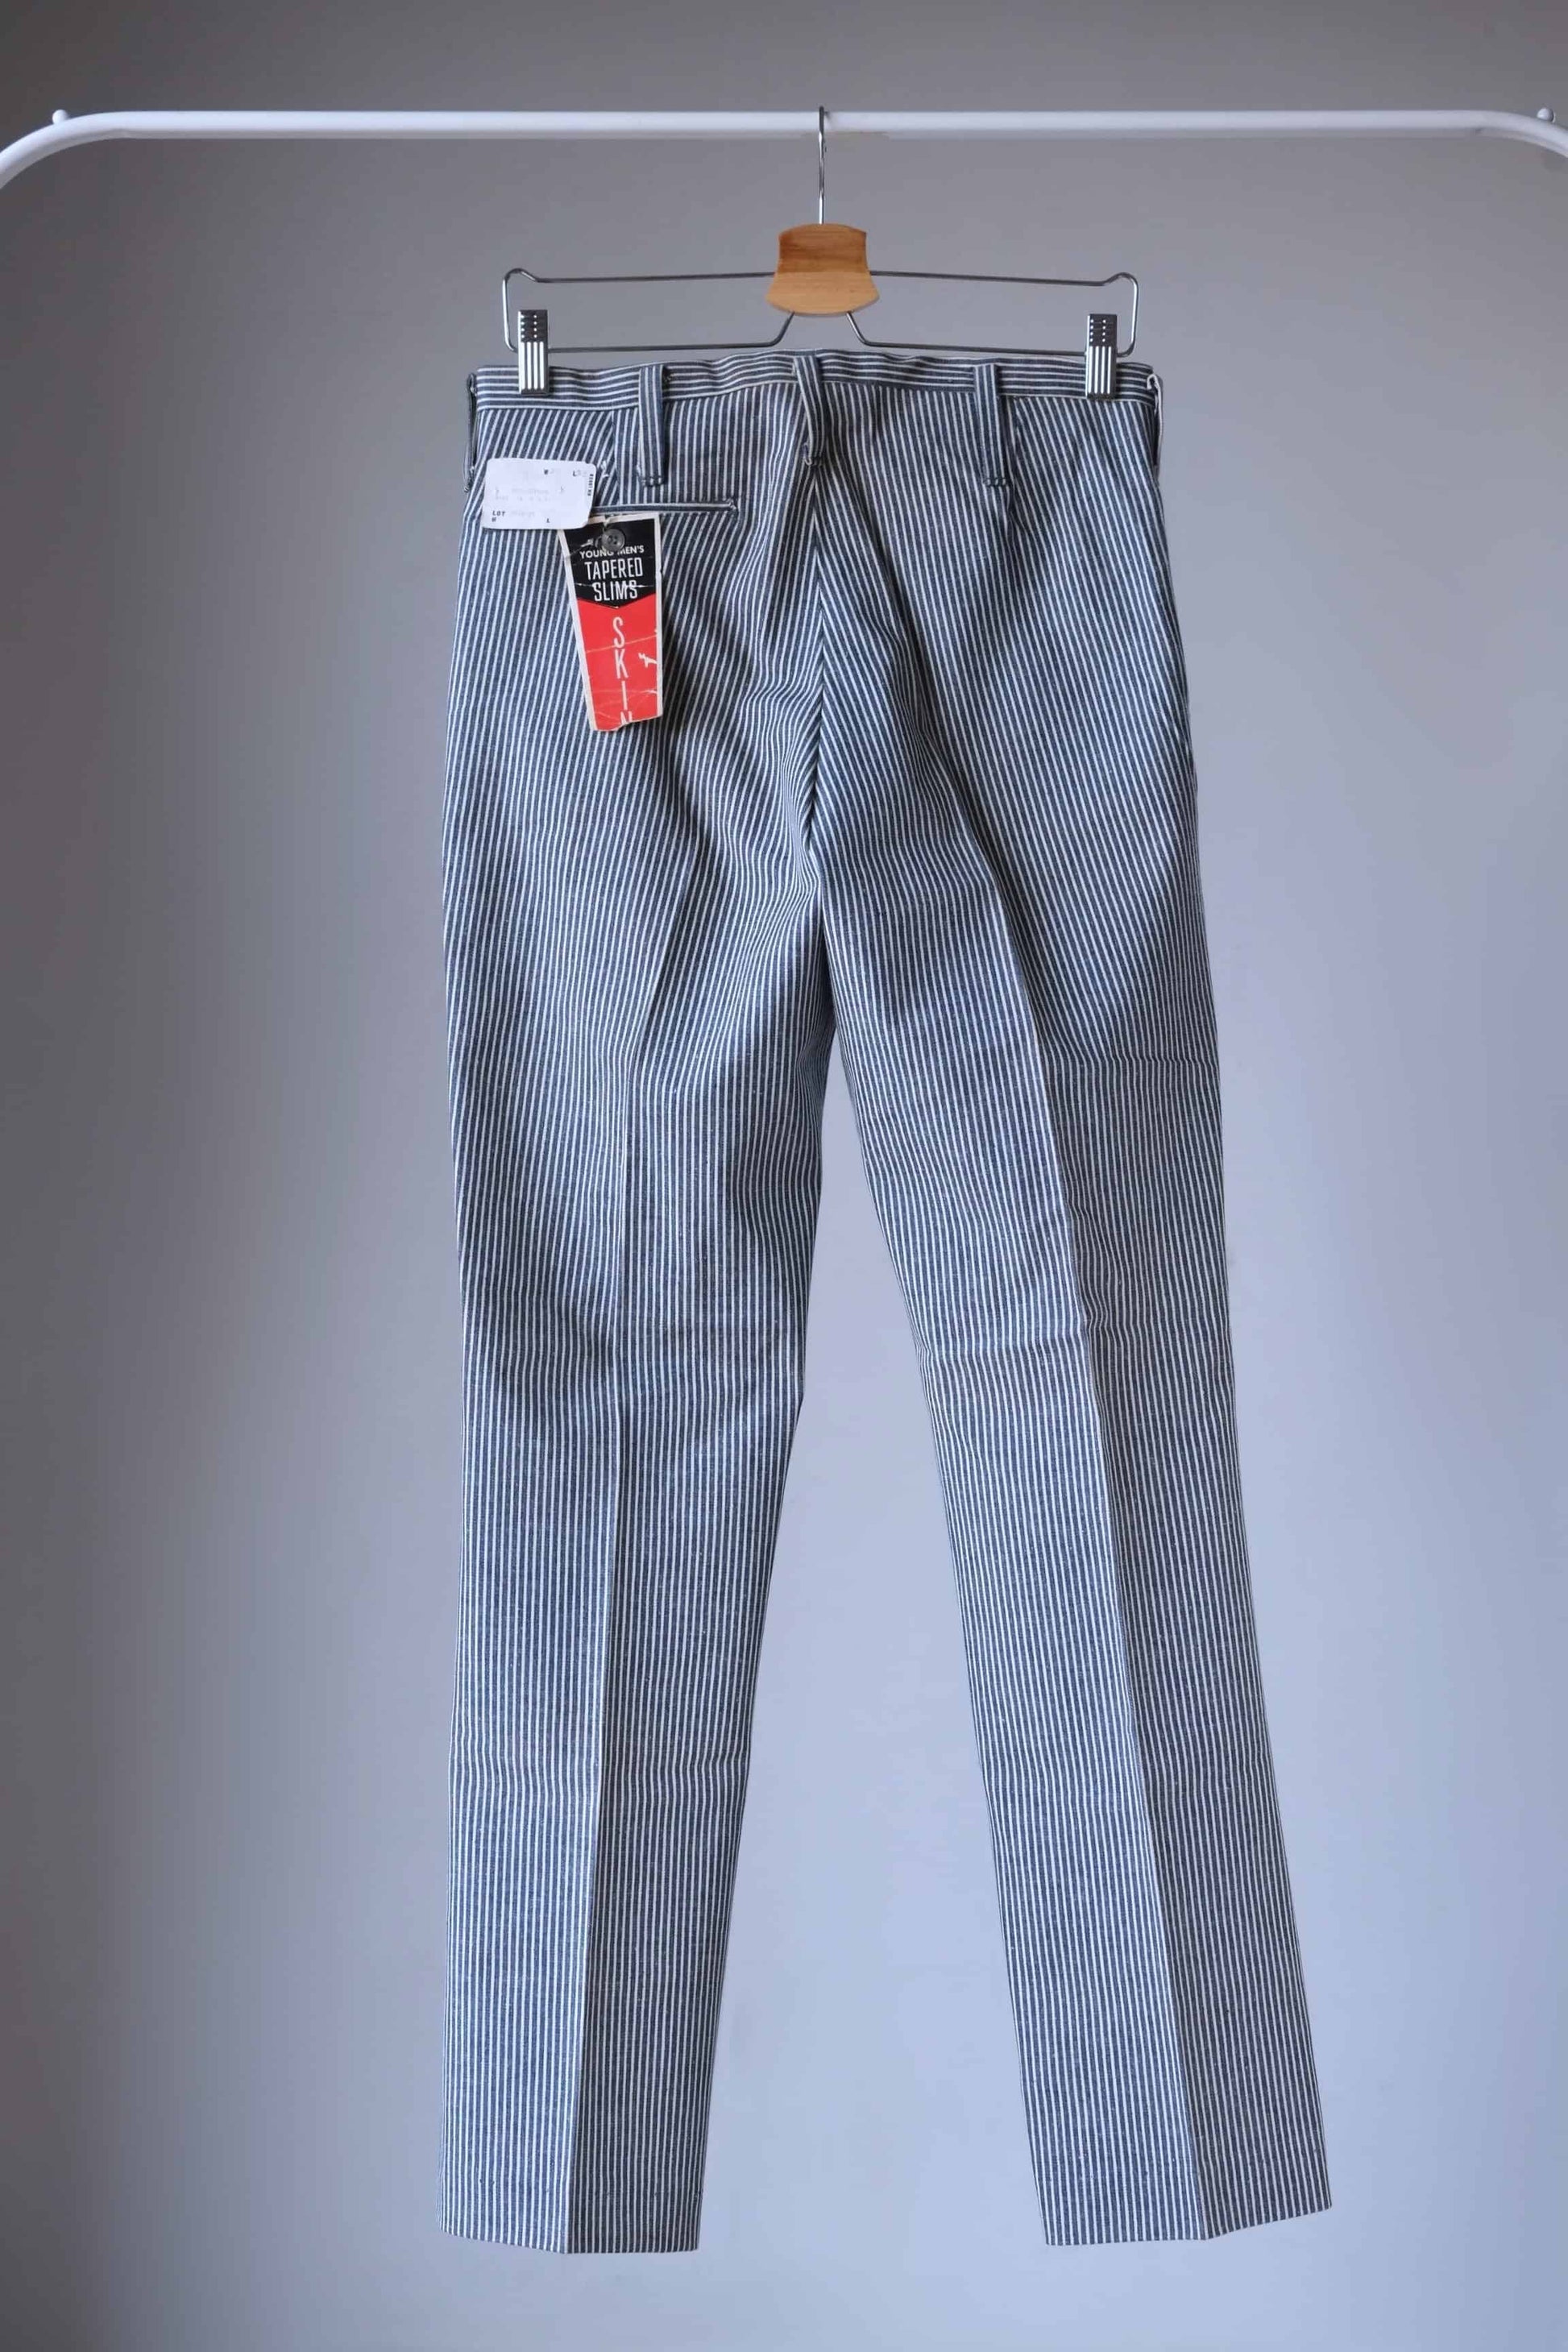 Back view of LEE 60's Vintage Tapered Slim Pants black and white stripes, on hanger